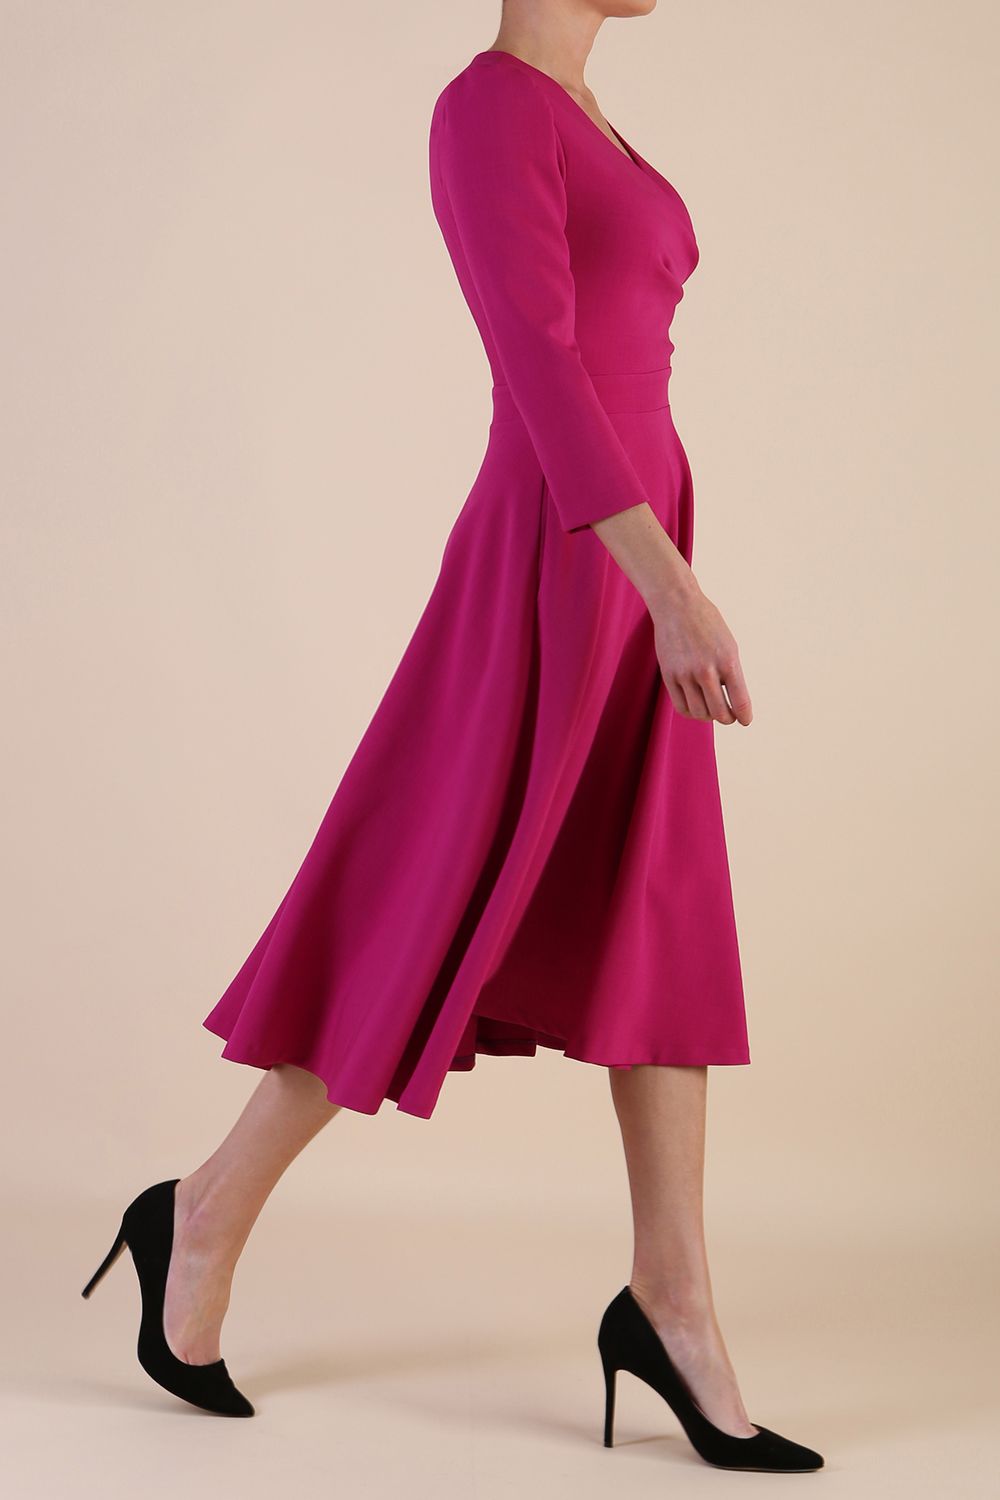 Model wearing diva catwalk Kate 3/4 Length Sleeve A-Line Swing Dress in Magenta Haze with pockets side